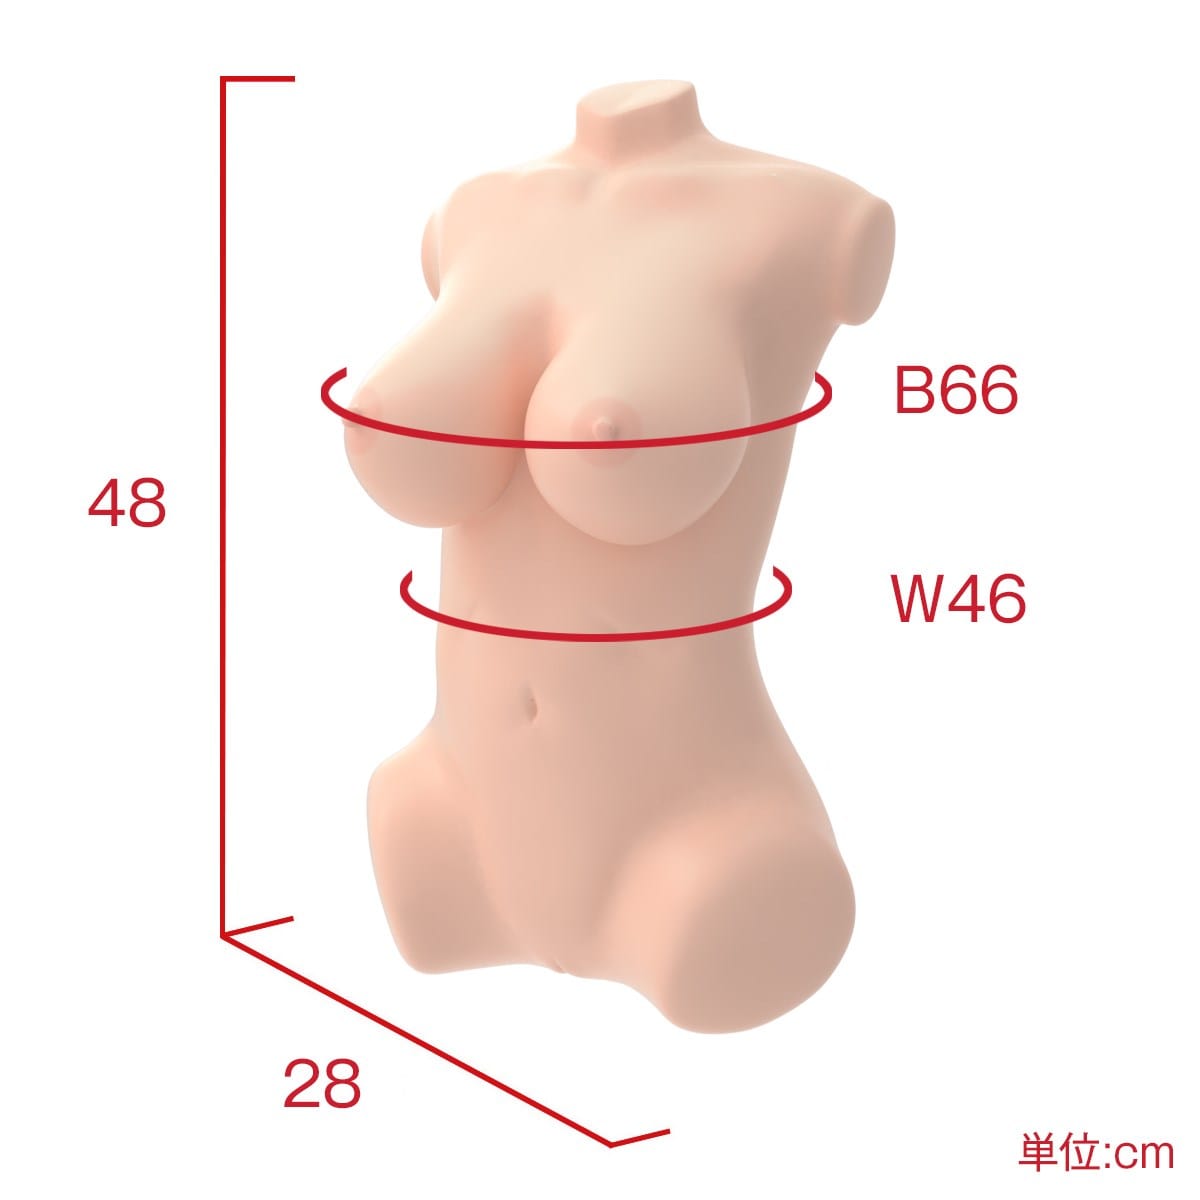 SSI Japan - Real body 3D bone system Glamorous Body Yuyu Sauce Masturbator Doll 8kg -  Doll  Durio.sg